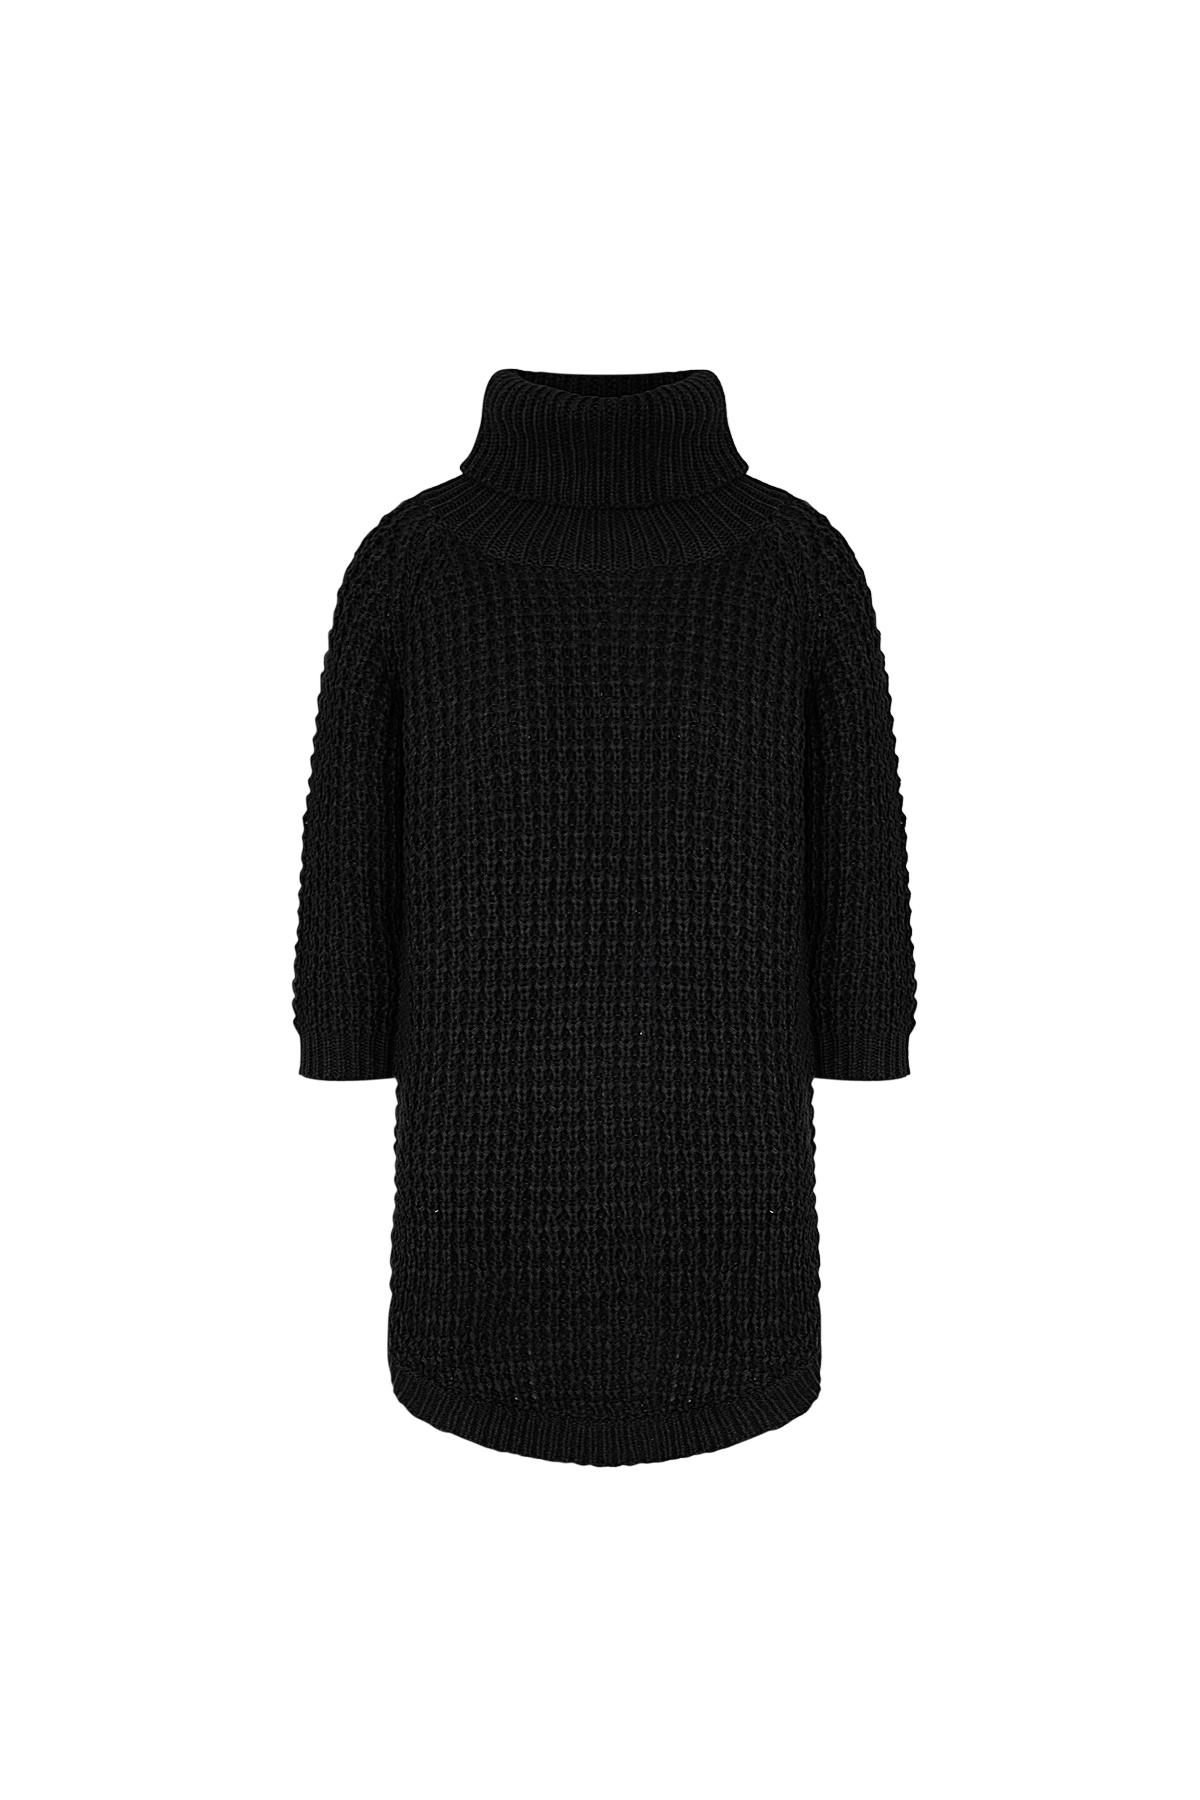 Long turtleneck sweater chunky knit Black L/XL